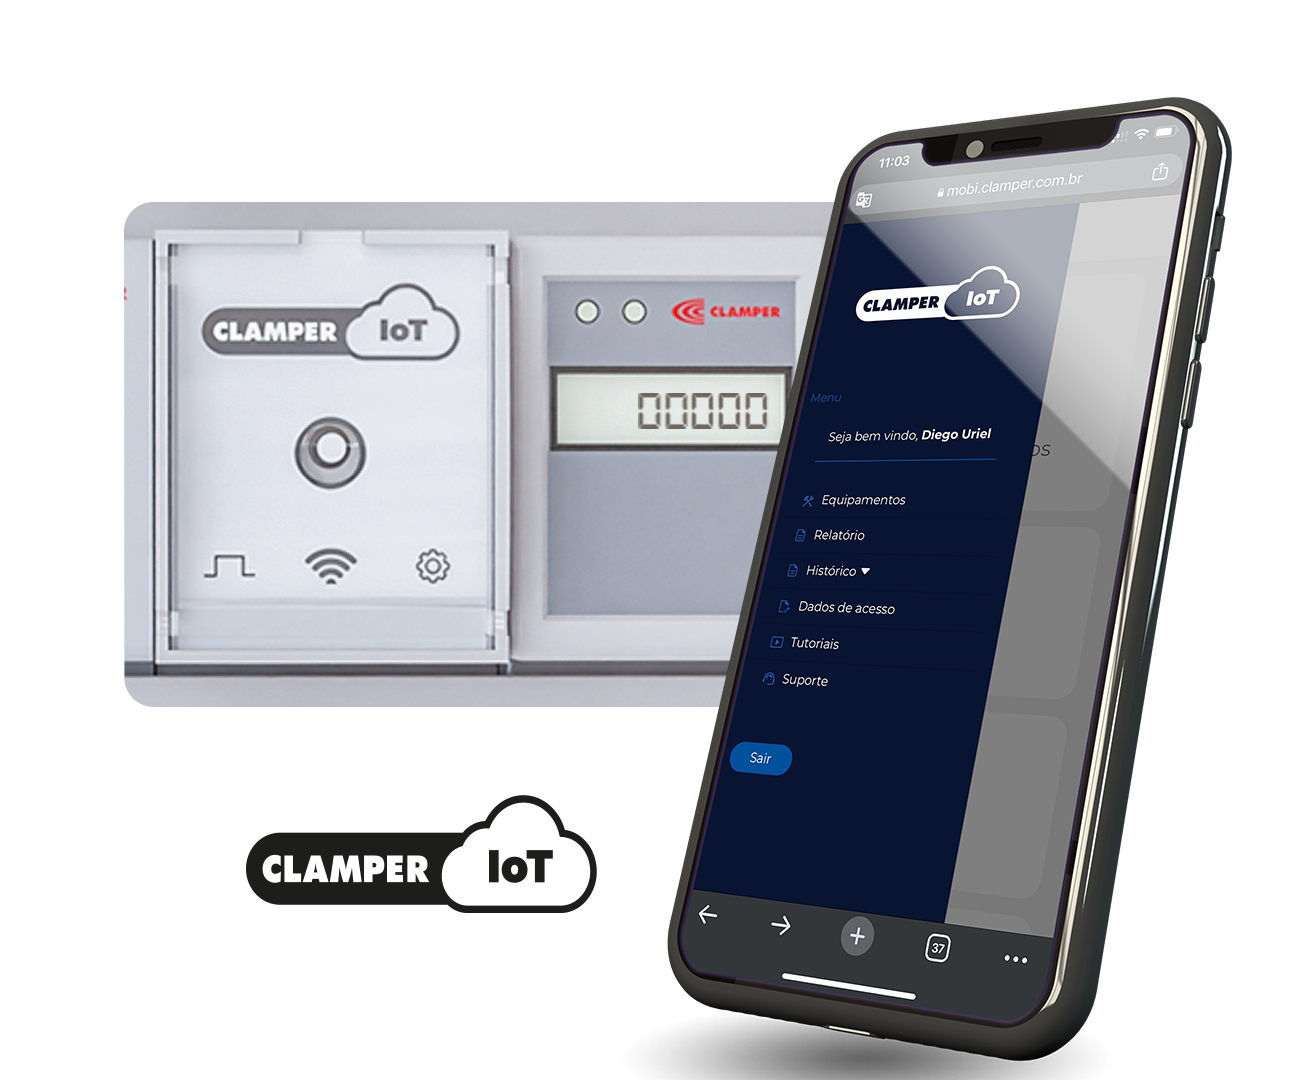 produto CLAMPER Mobi Plug IoT